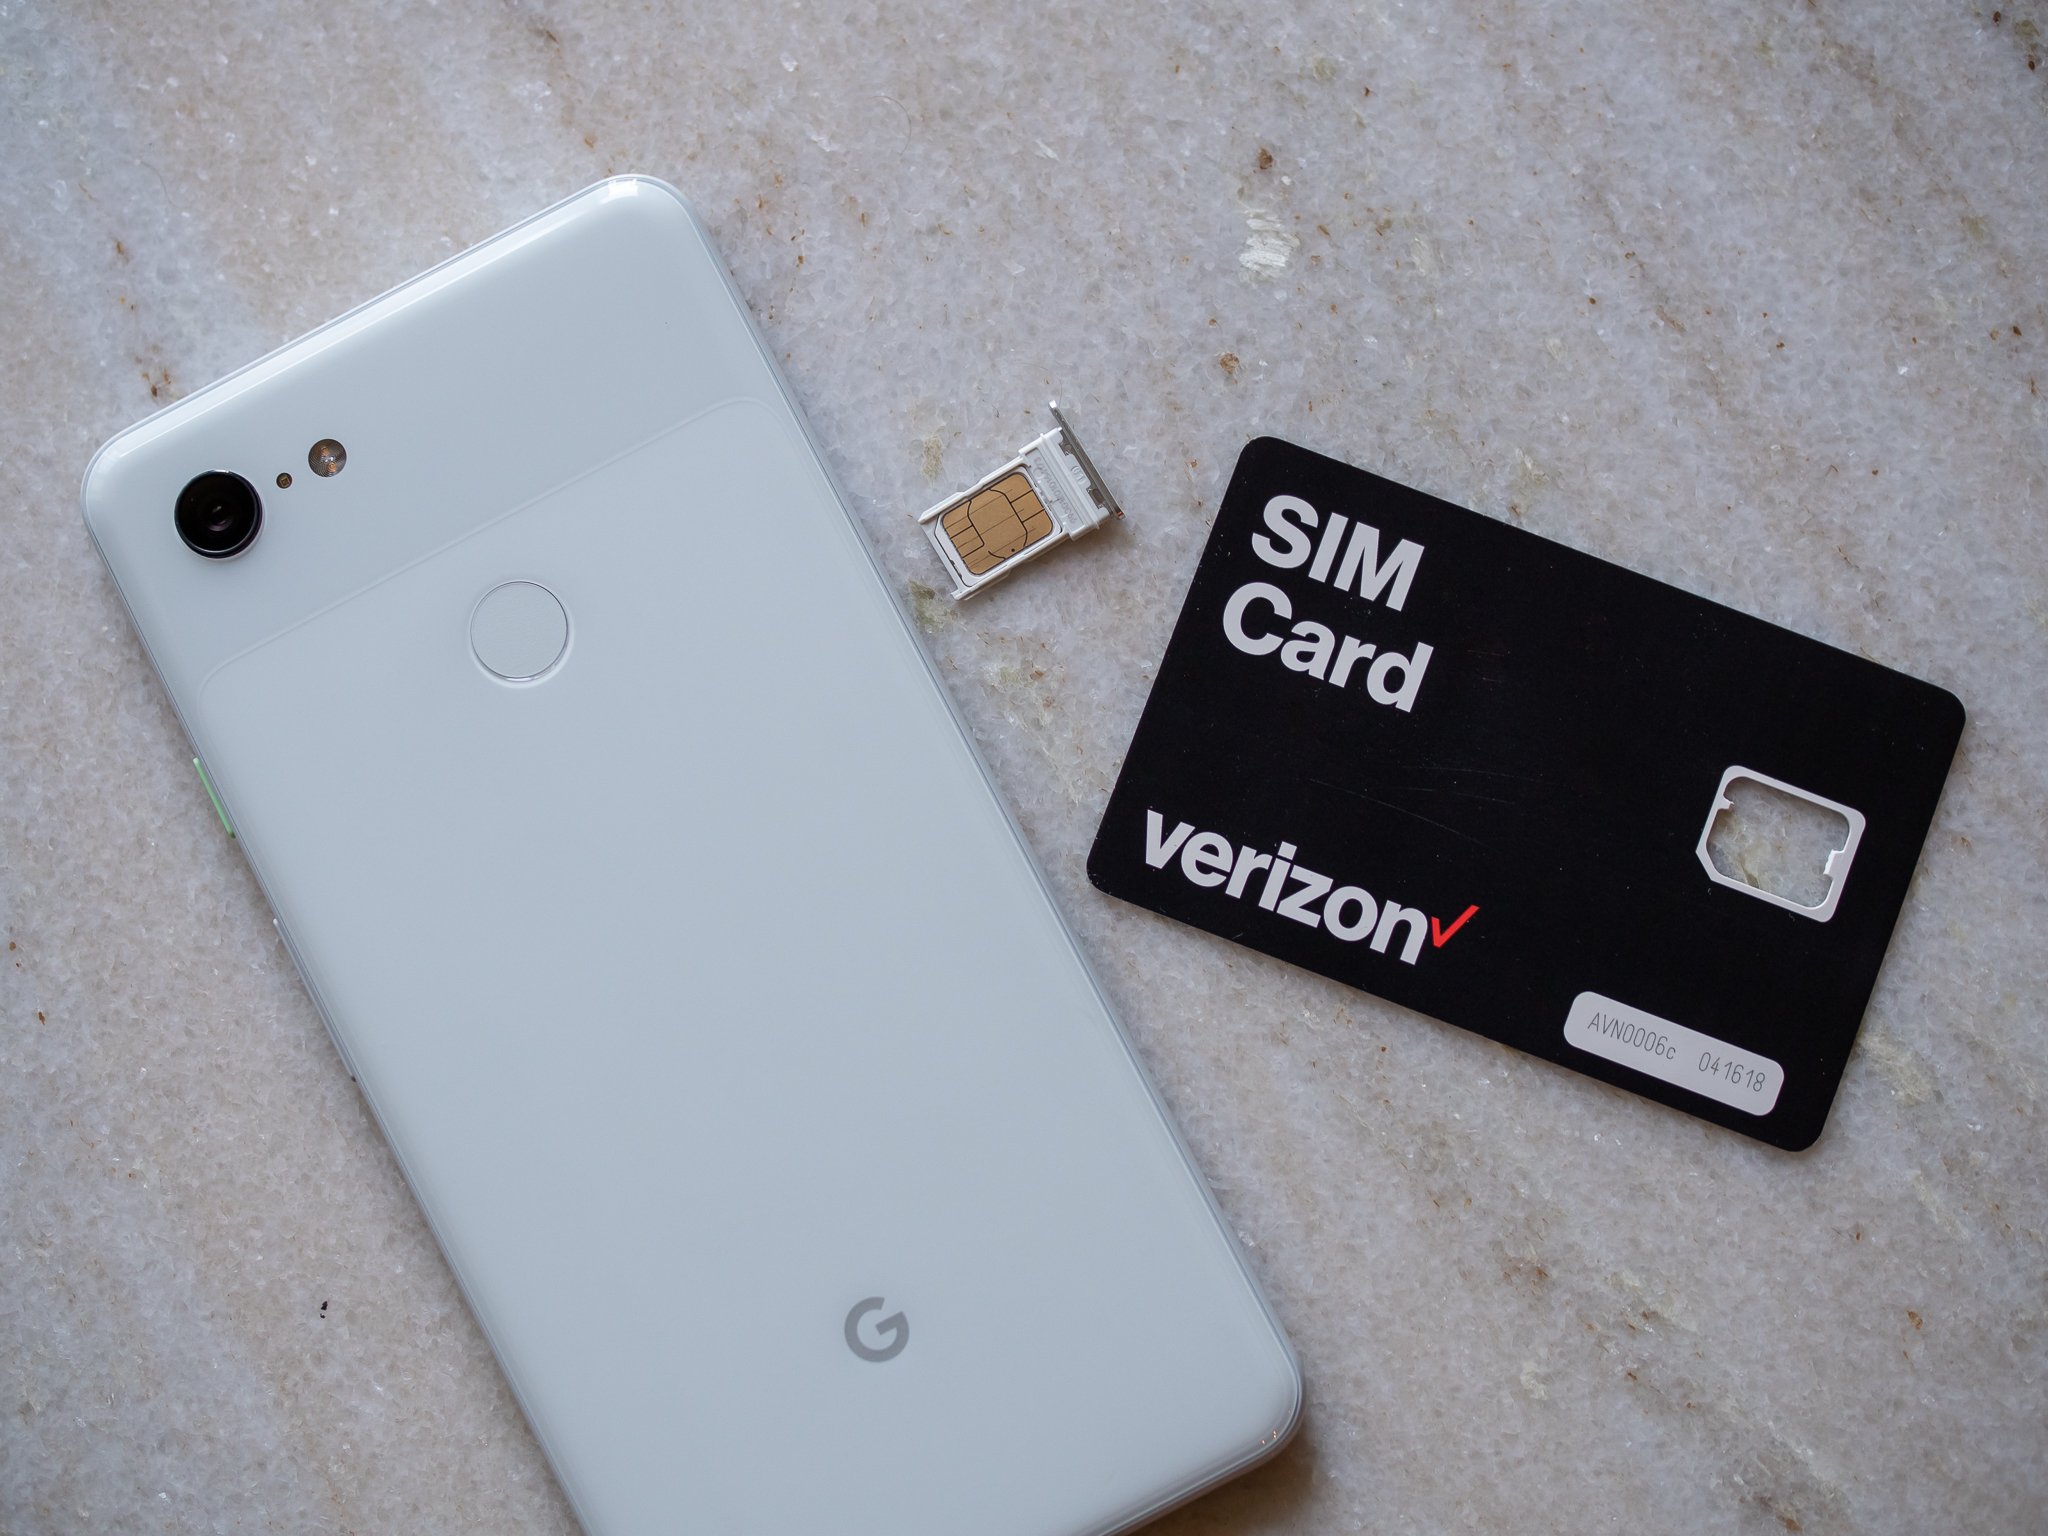 Google Pixel 3 XL with Verizon SIM